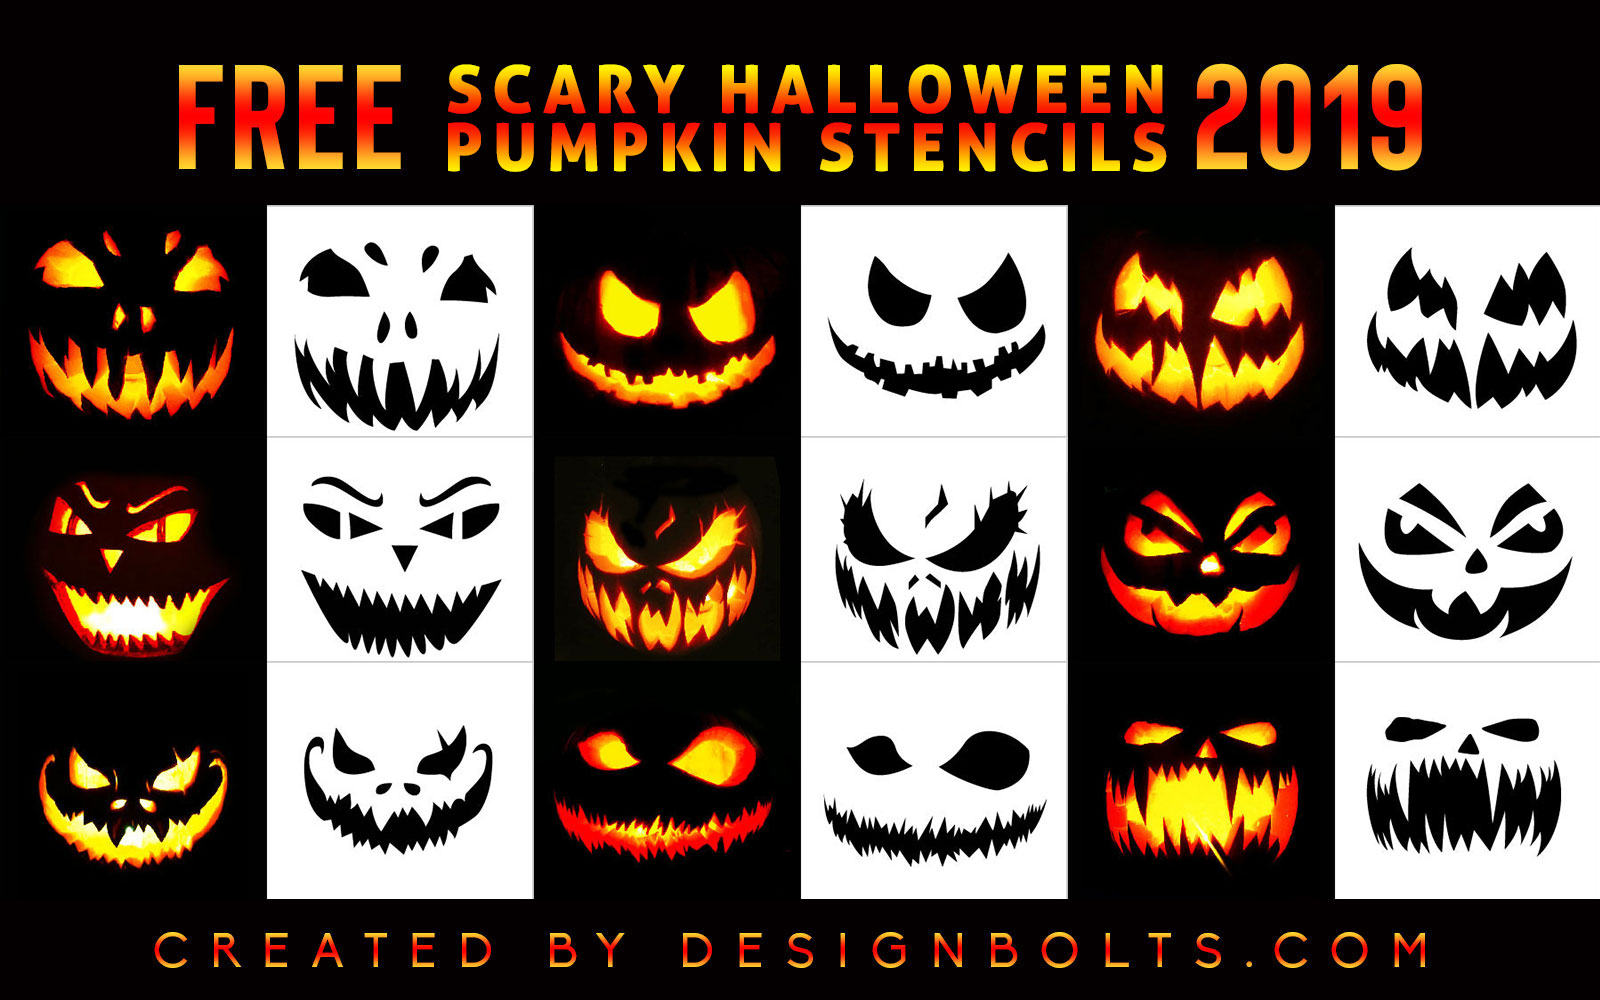 10 Free Scary Halloween Pumpkin Carving Stencils, Patterns & Ideas 2019